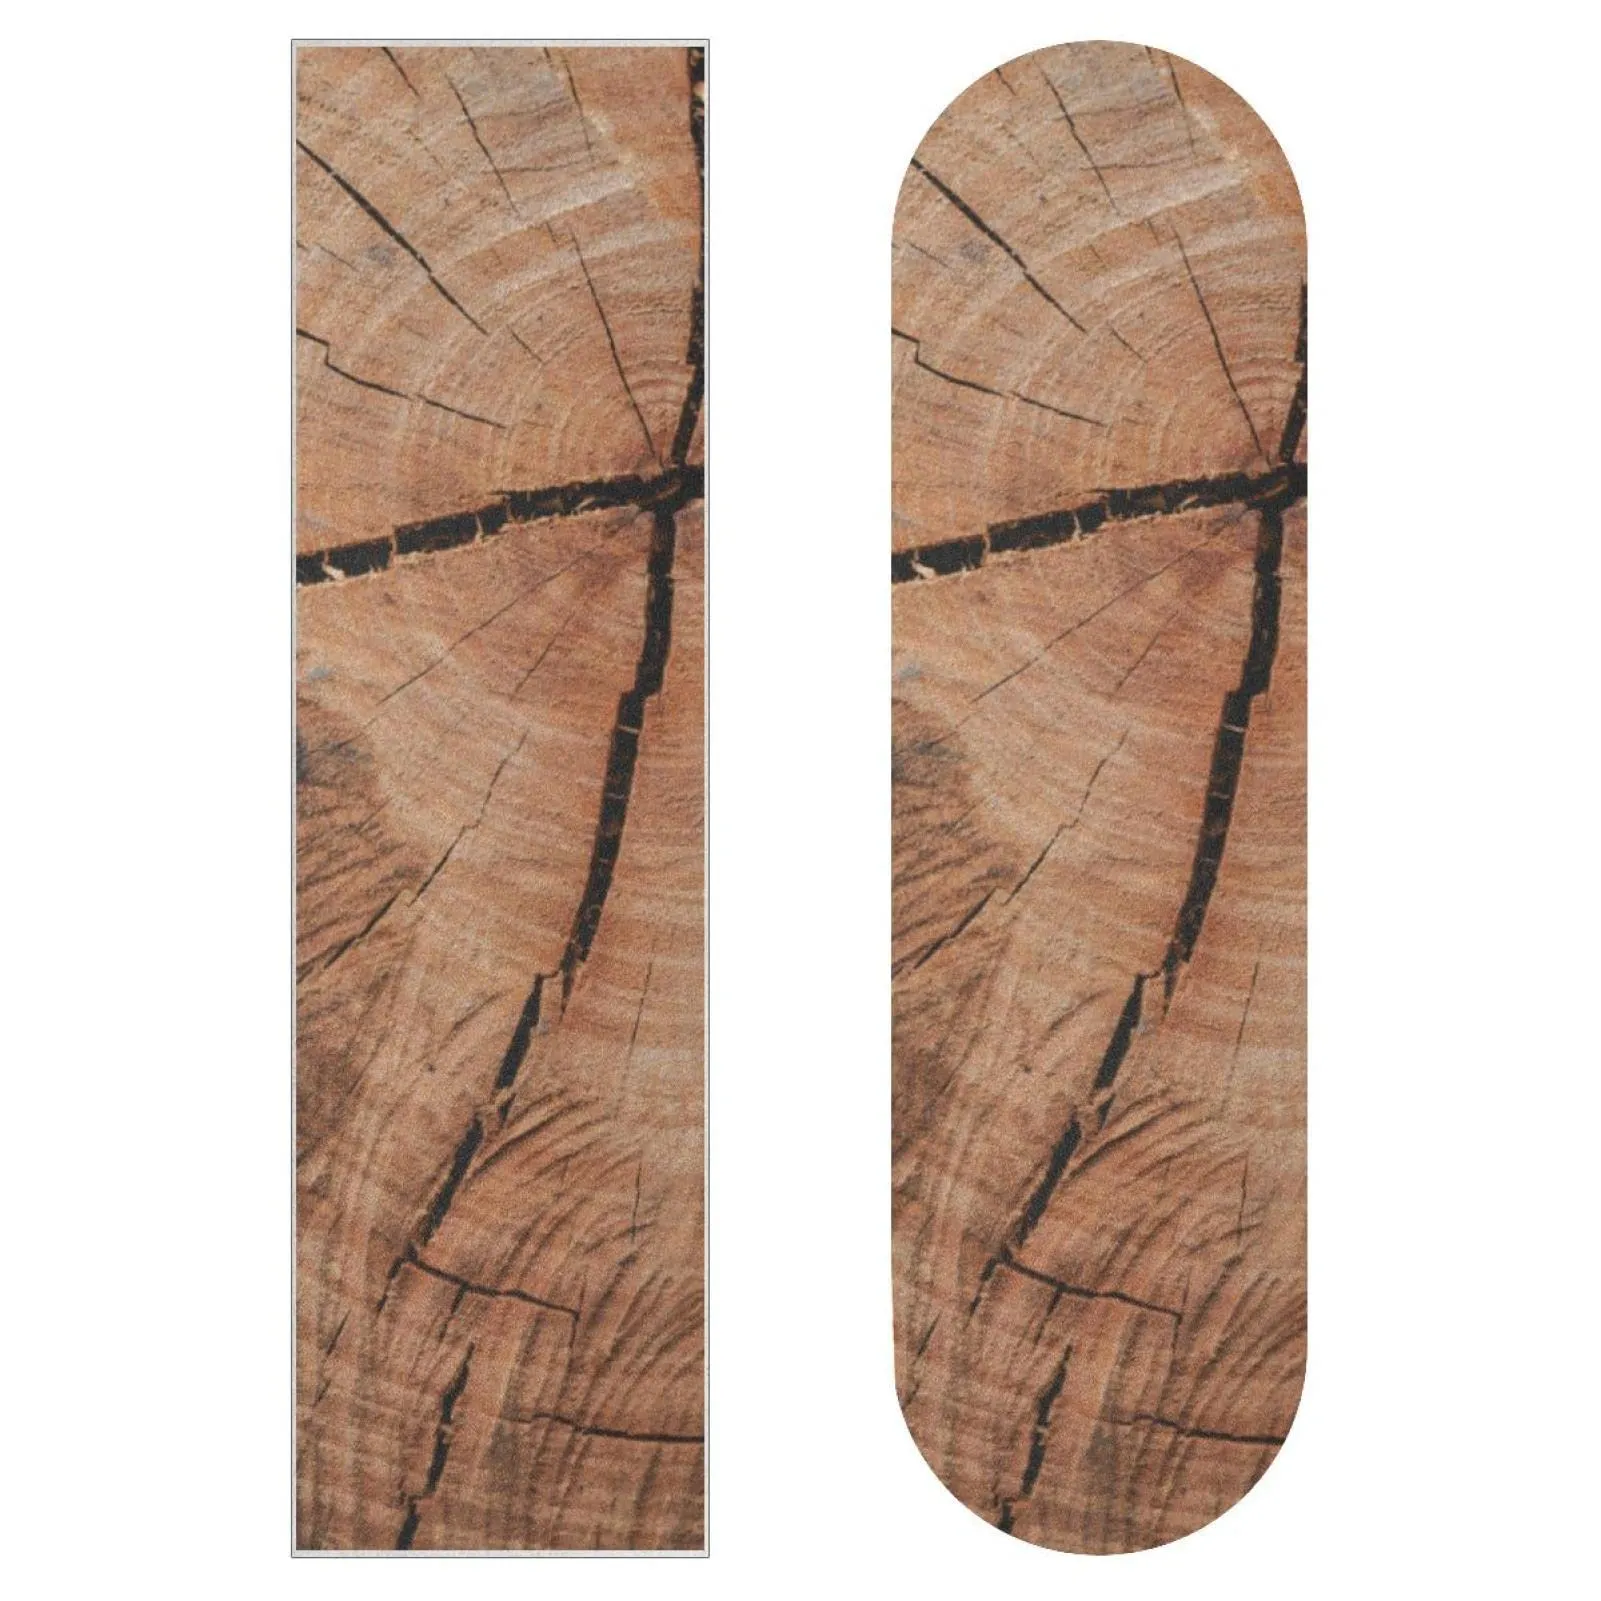 Skateboards greppband design hjärta snidad i trä bakgrund longboard anti slip sandpappers klistermärke skateboards papper 33x9 tum